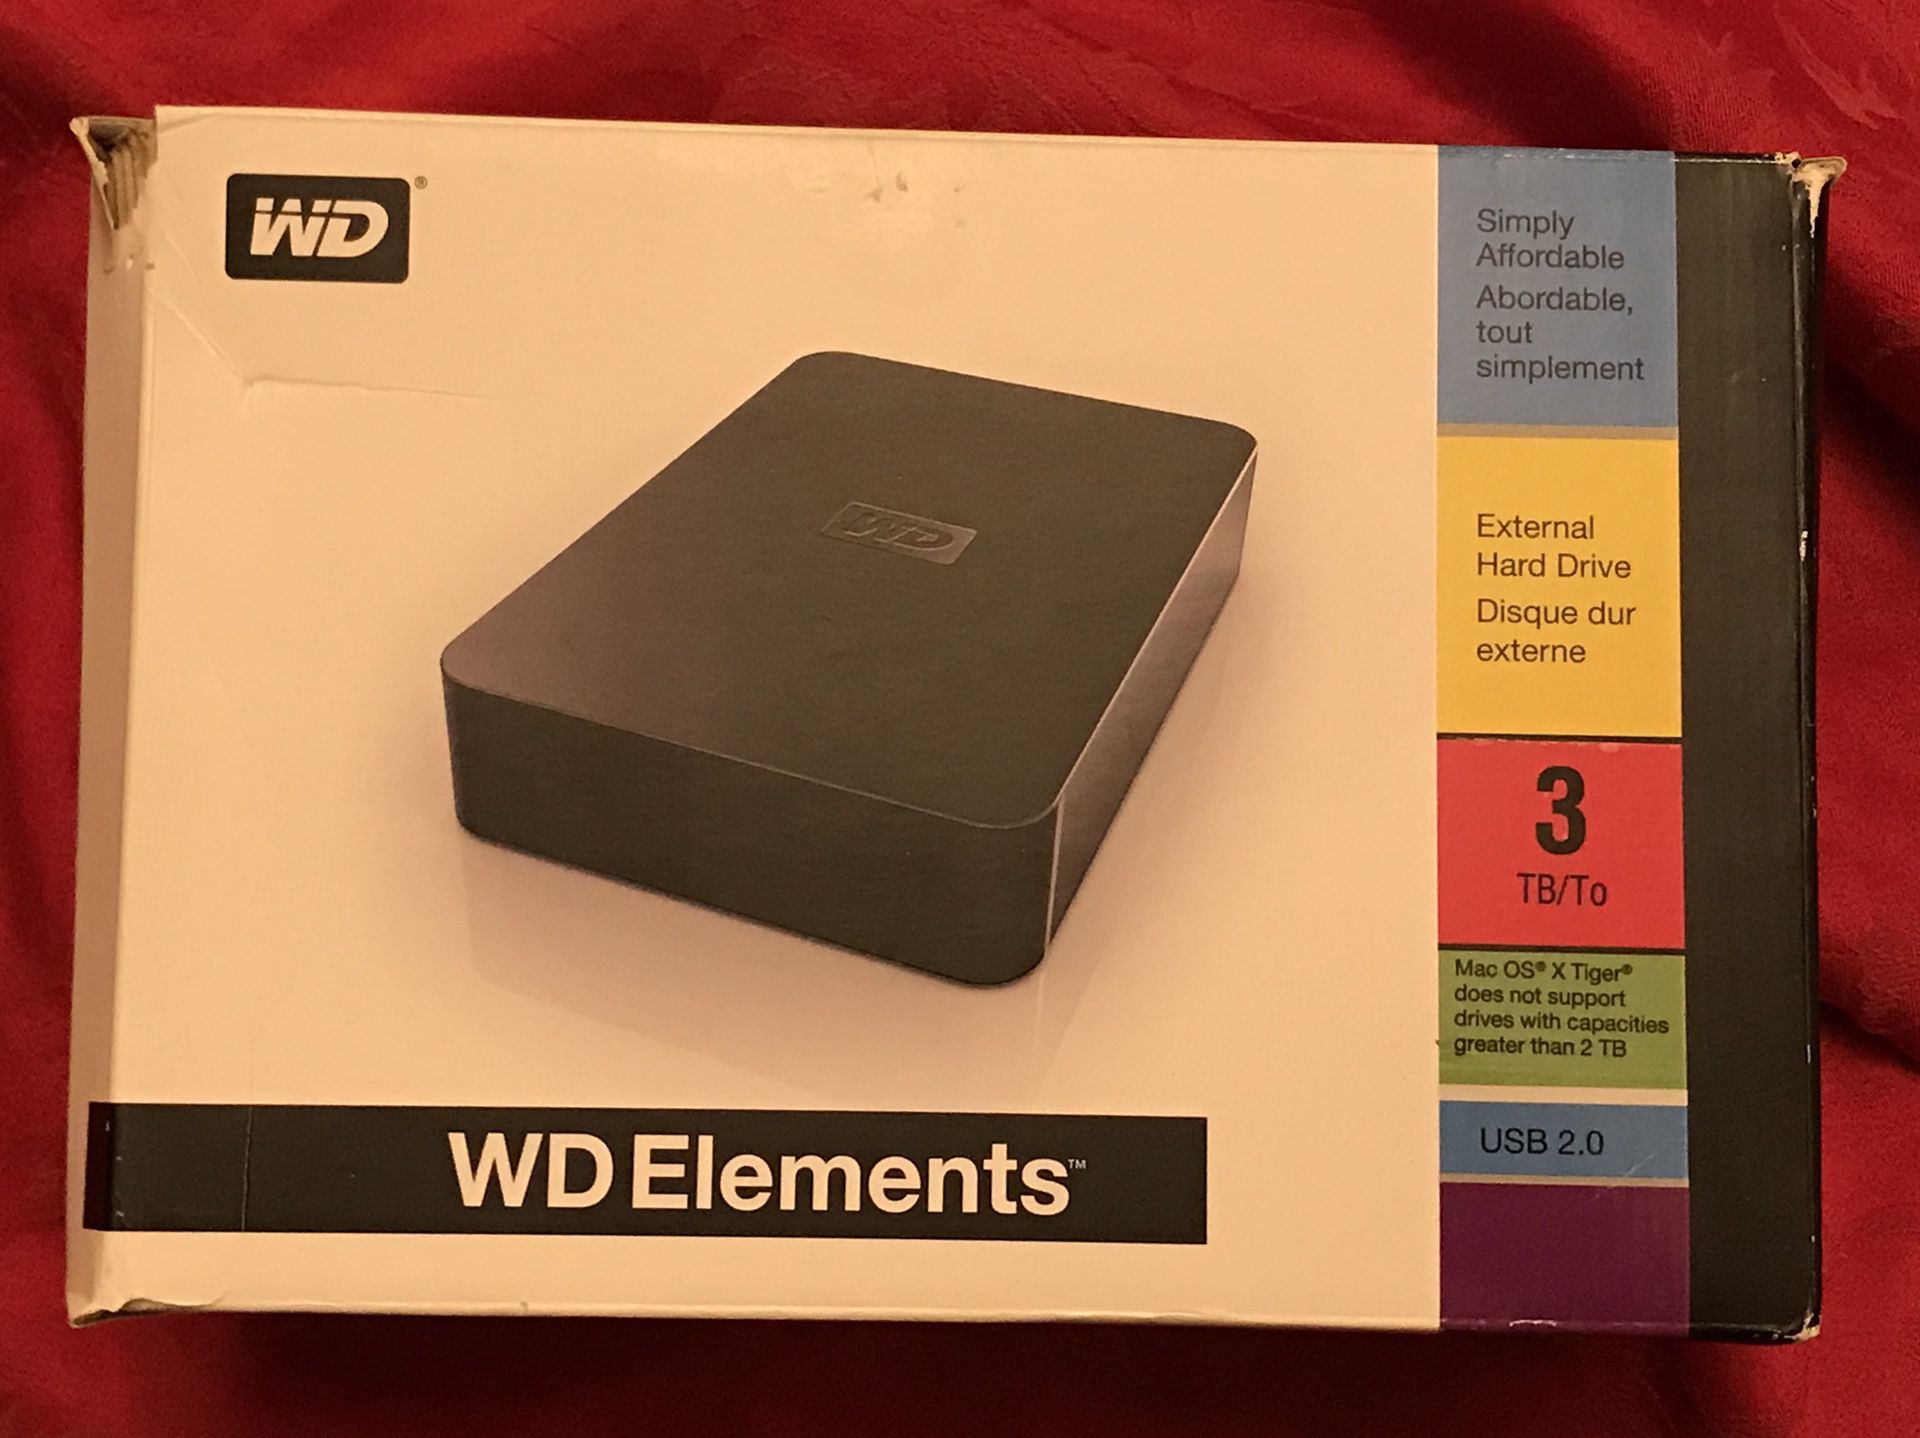 WD Elements 3TB External Hard Drive